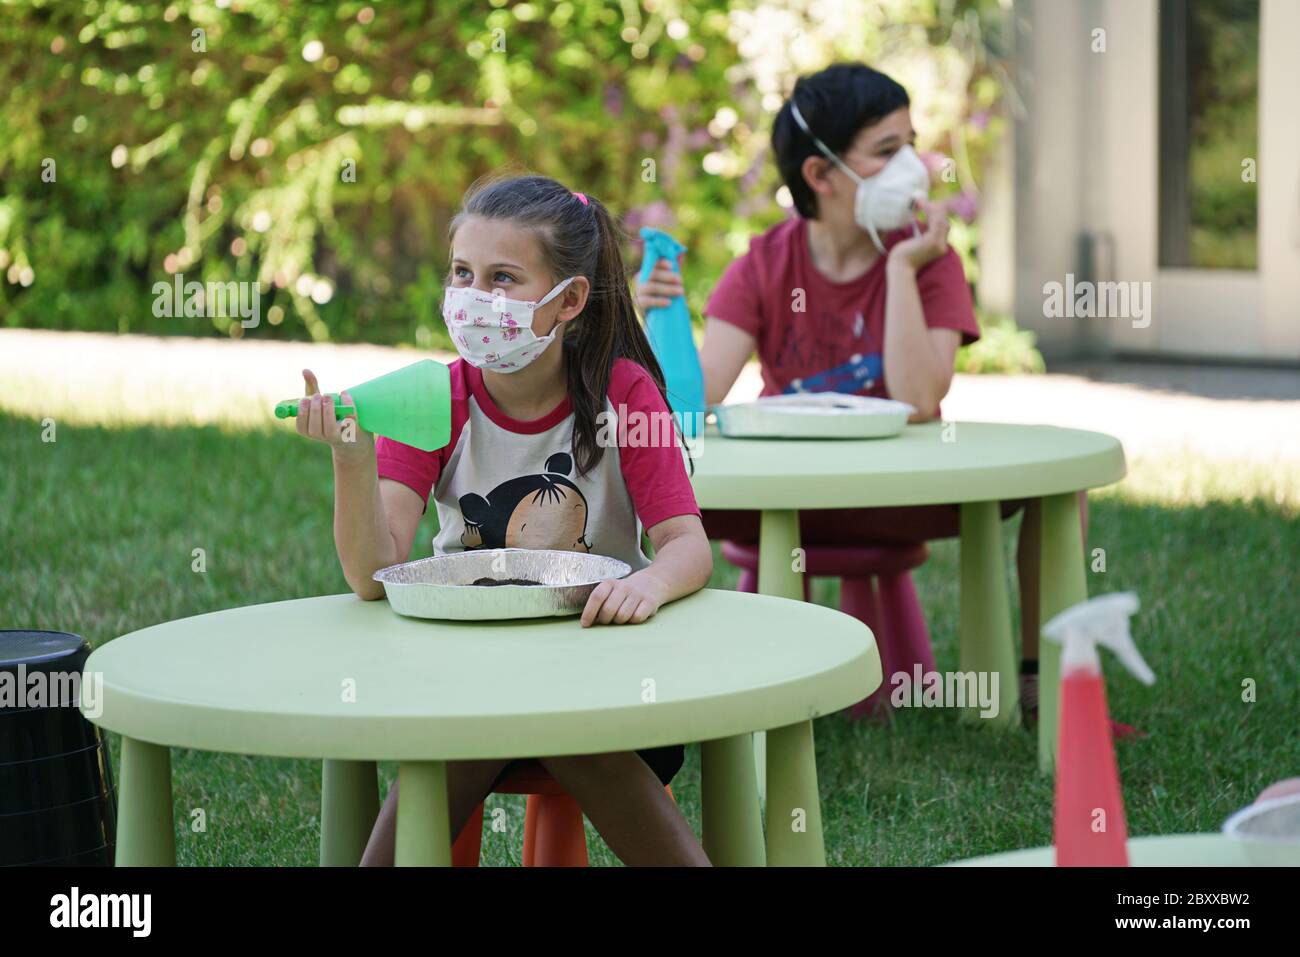 Coronavirus outbreak lifestyle:  outdoor summer school activities with social distancing measures. Turin, Italy - June 2020 Stock Photo